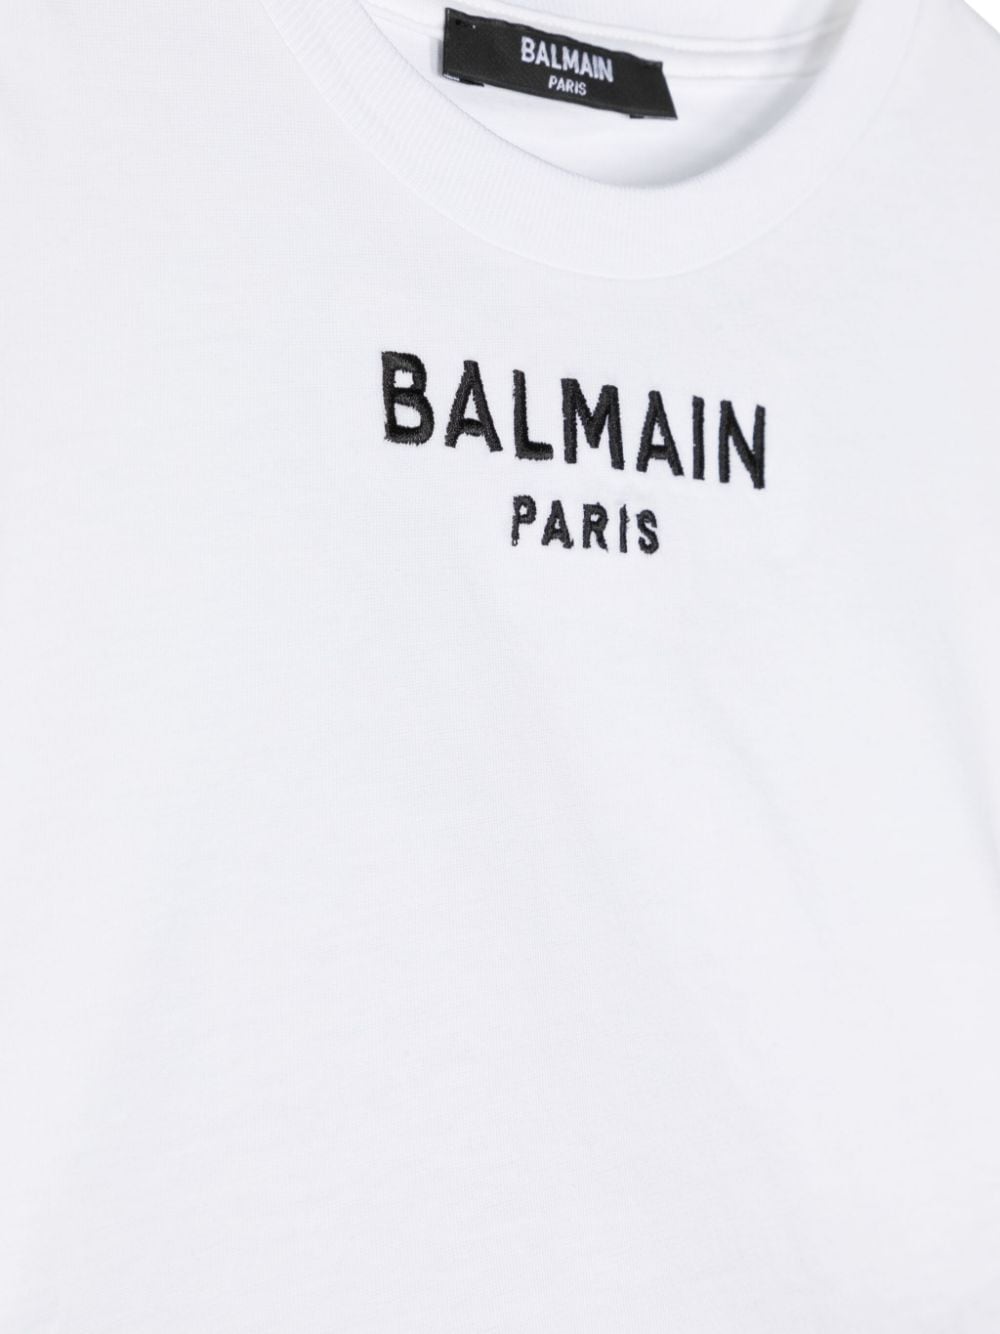 Balmain Kids t-shirt crop